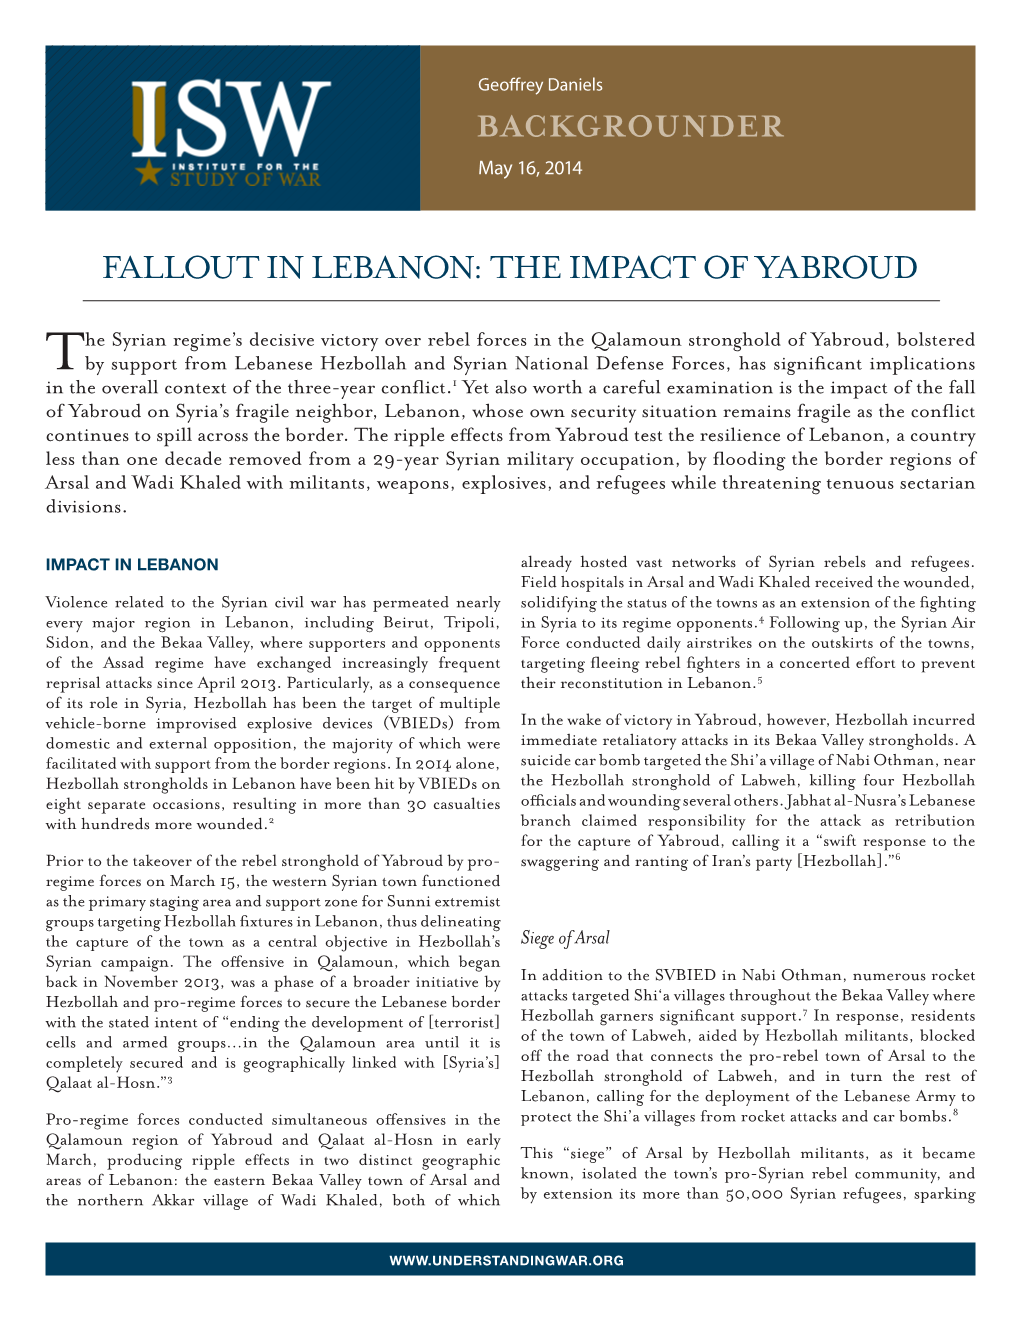 Fallout in Lebanon: the Impact of Yabroud